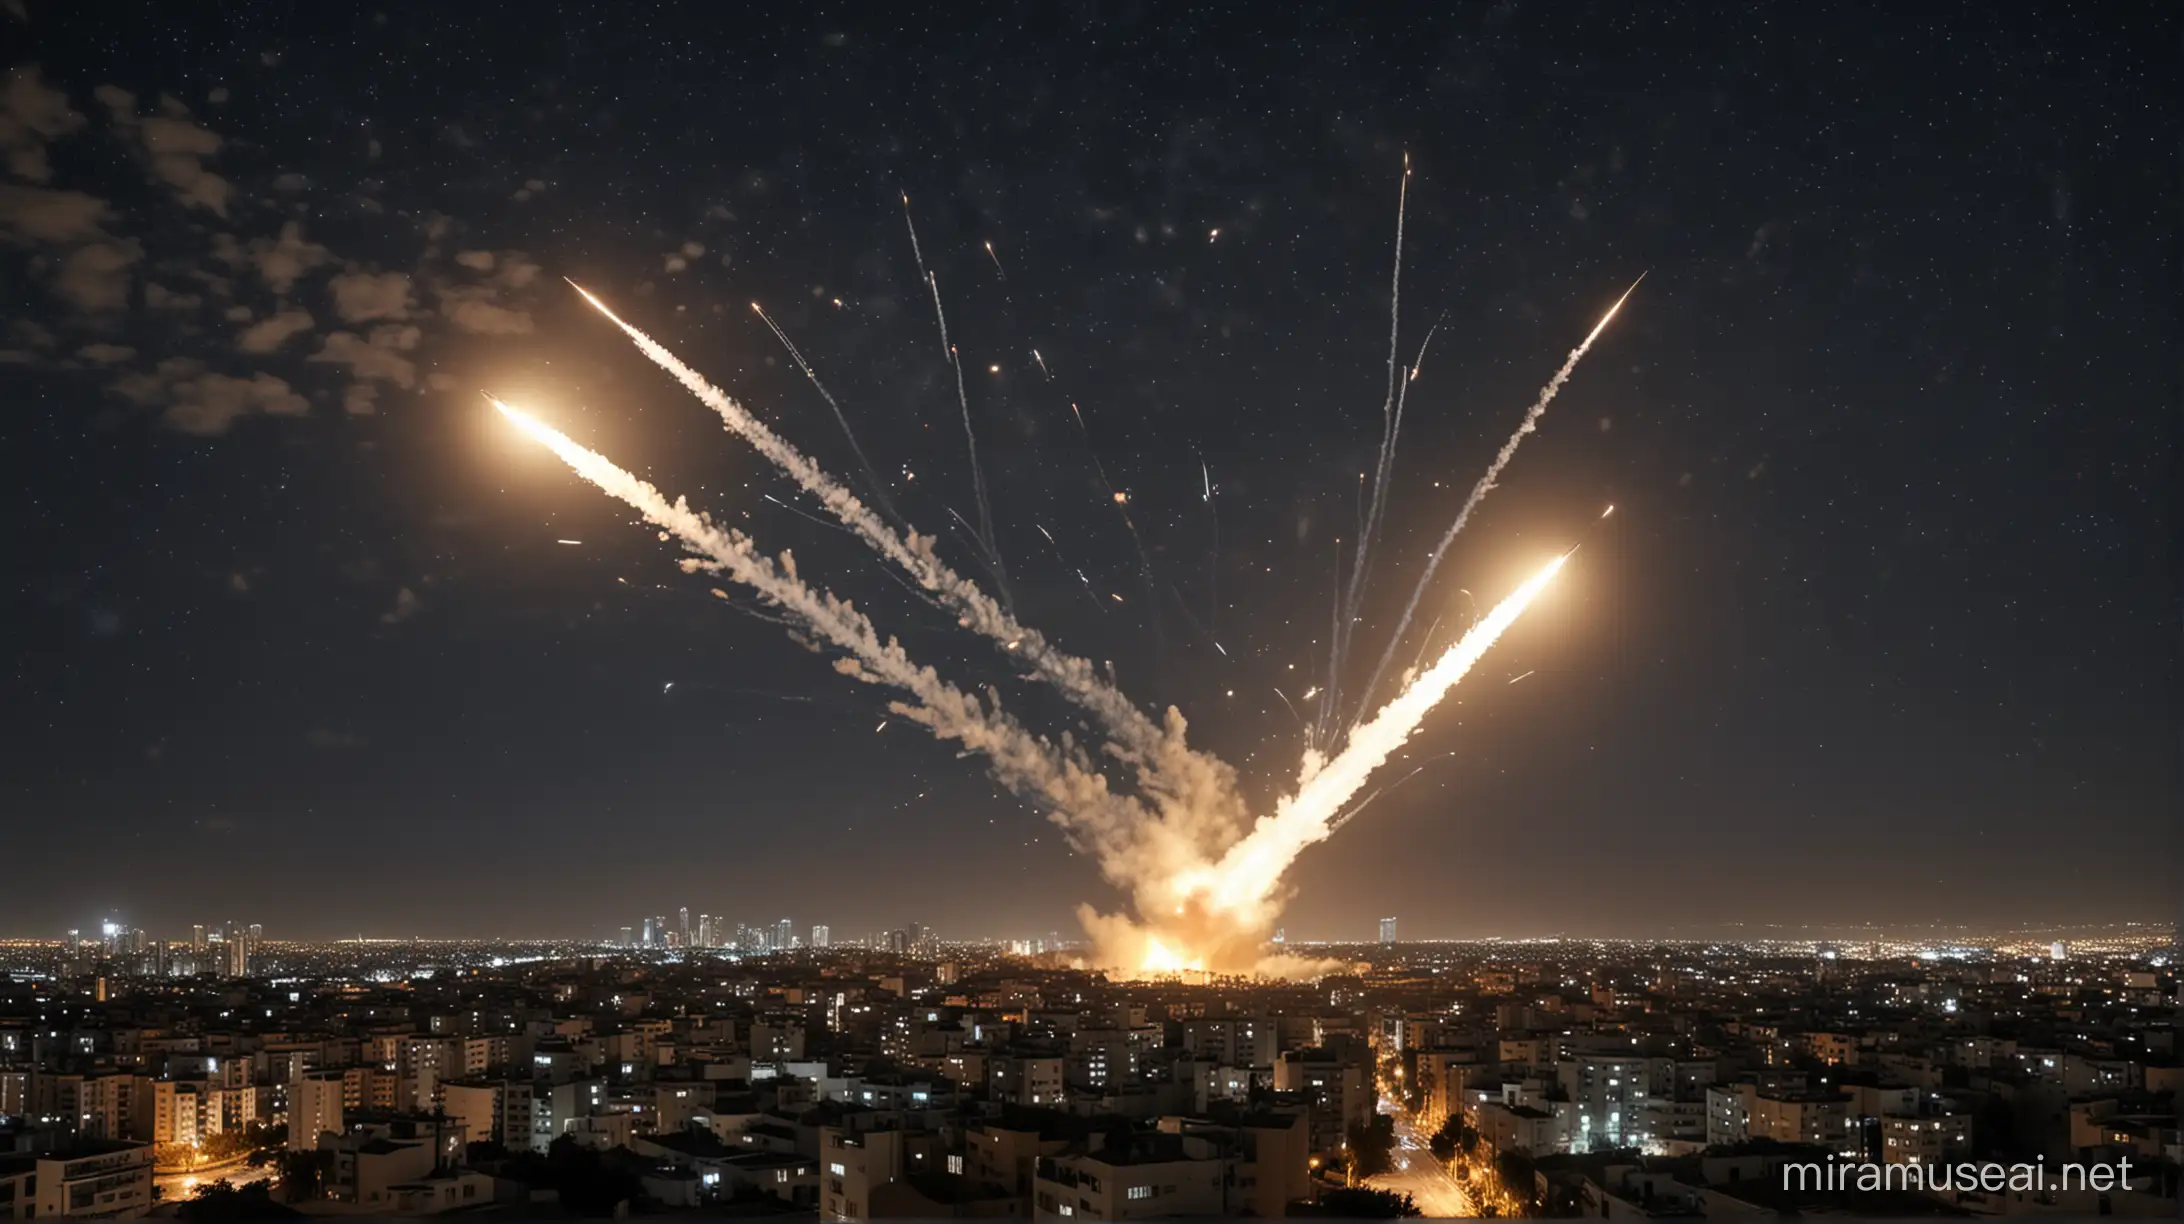 Iron Dome AntiMissile System Intercepts Missiles Over Tel Aviv